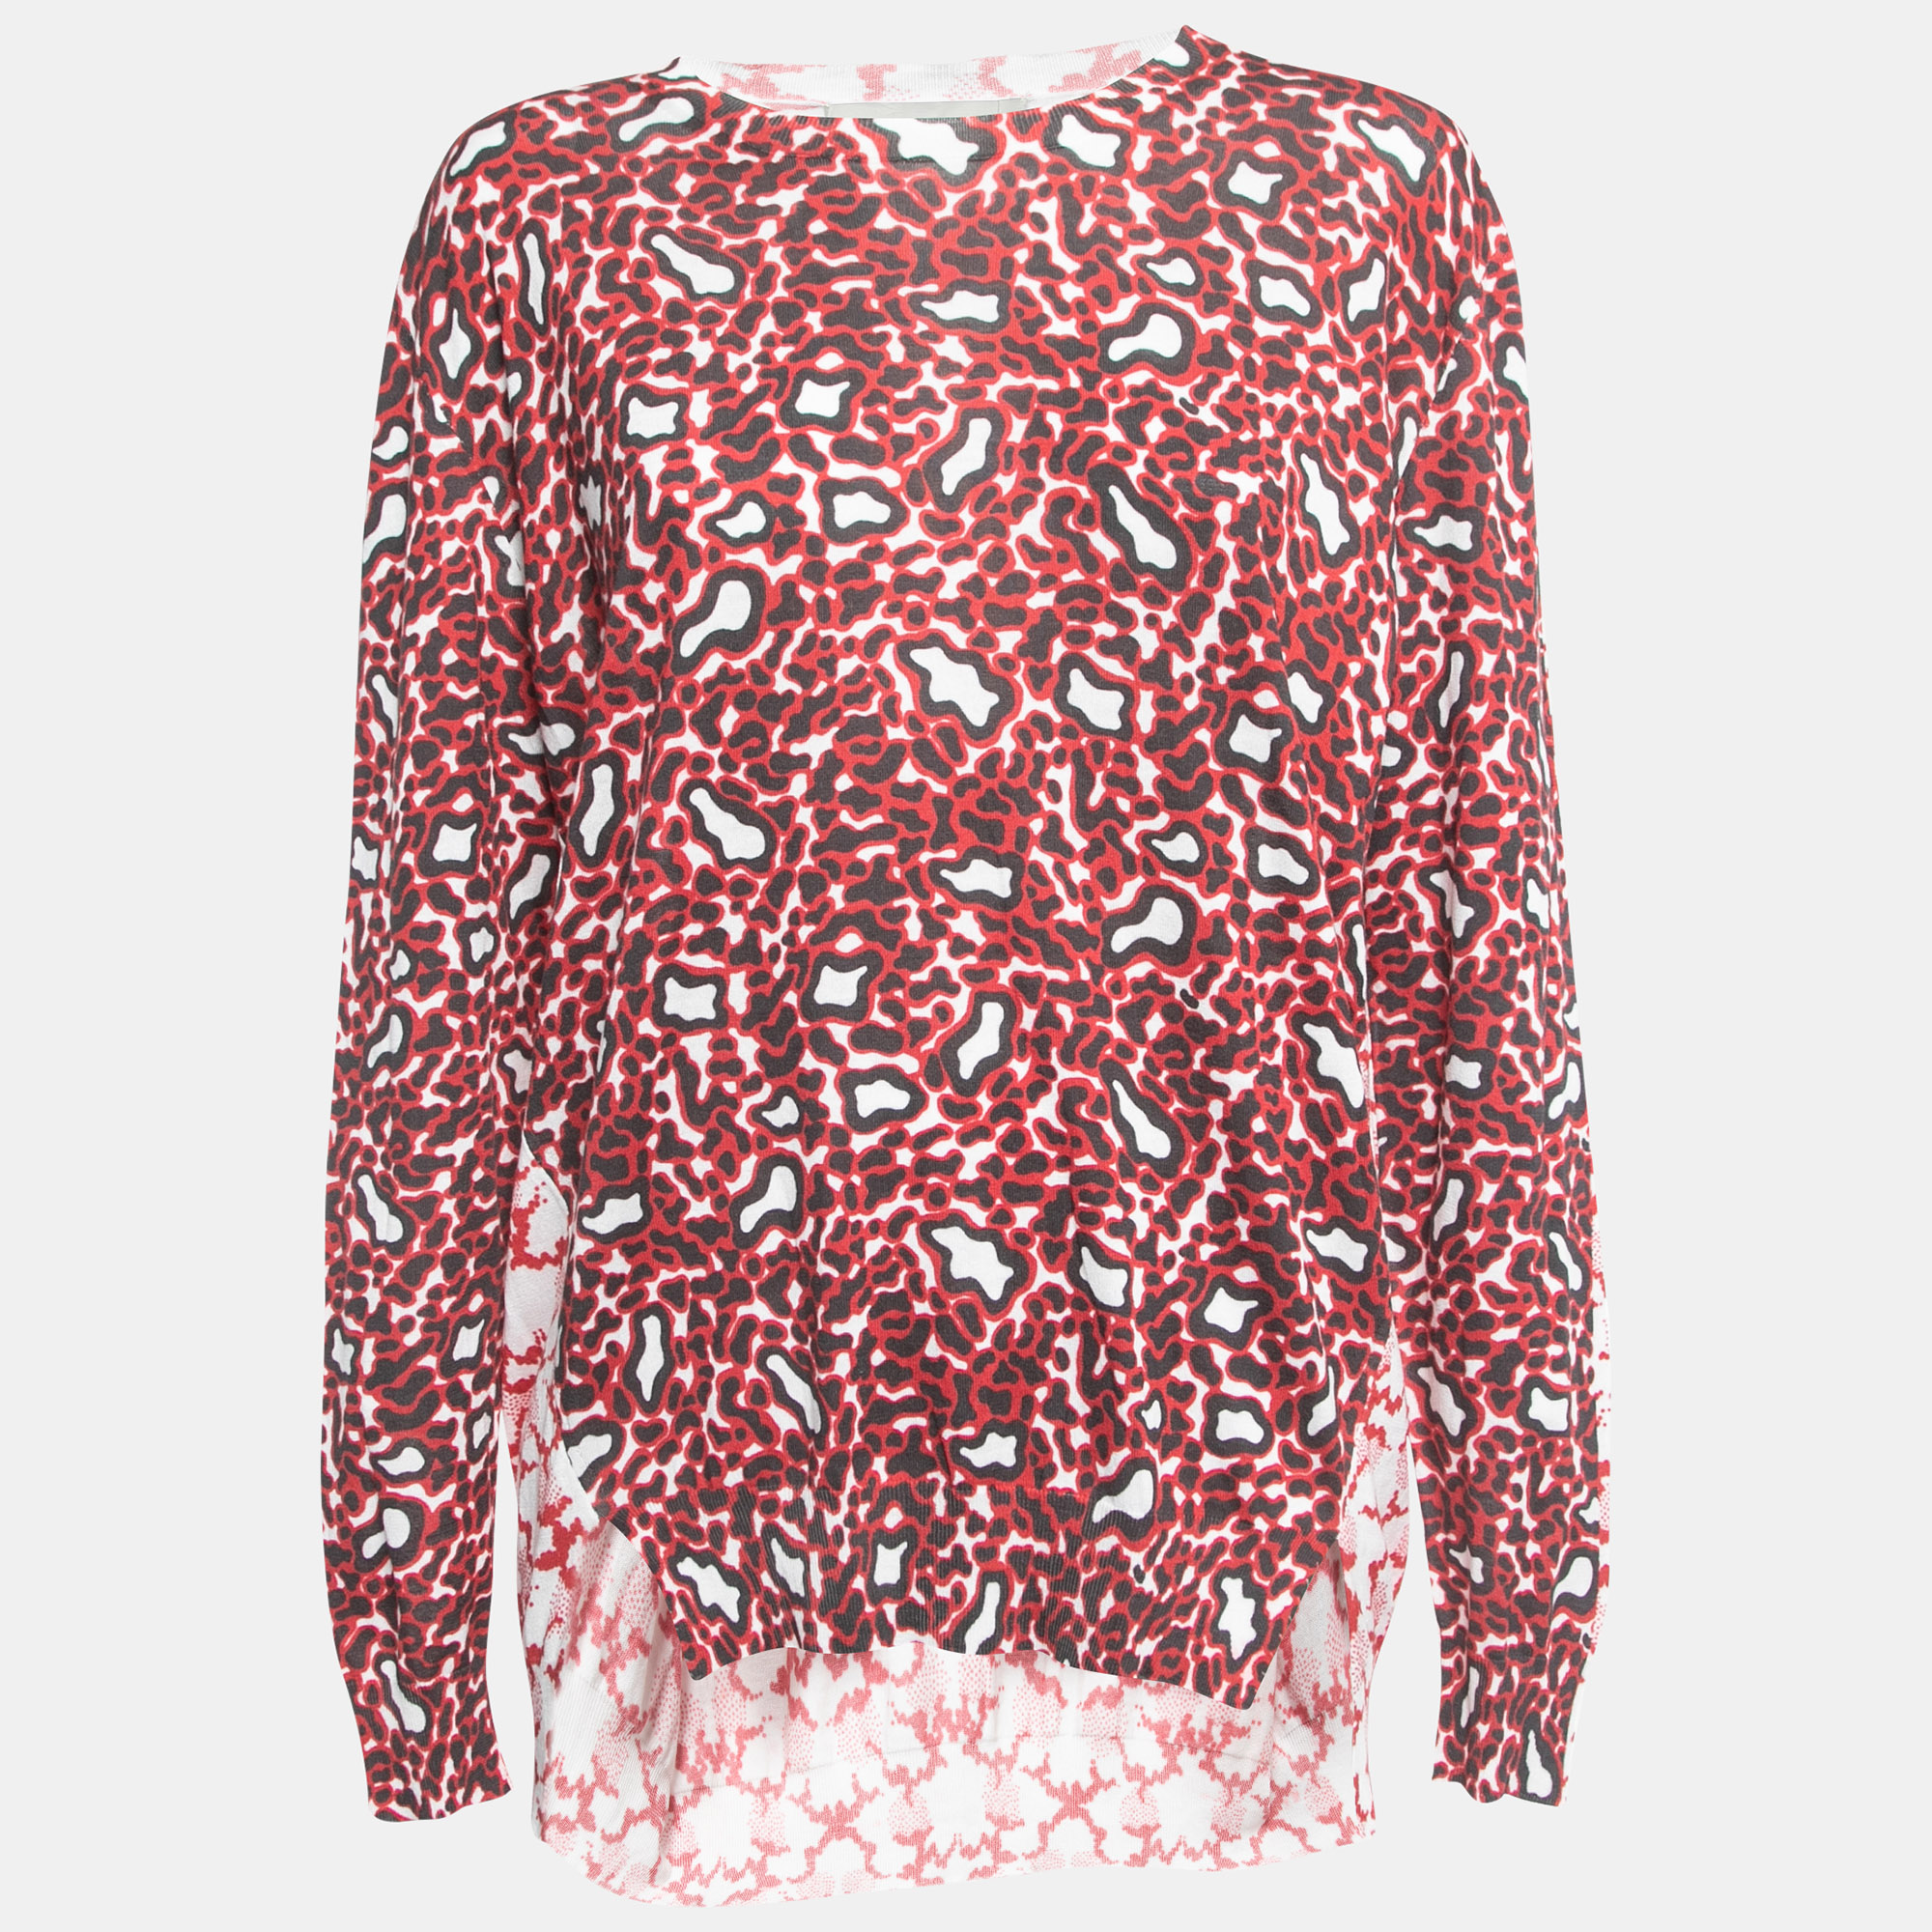 Stella McCartney Red Leopard Print Cotton Knit Long Sleeve Top M